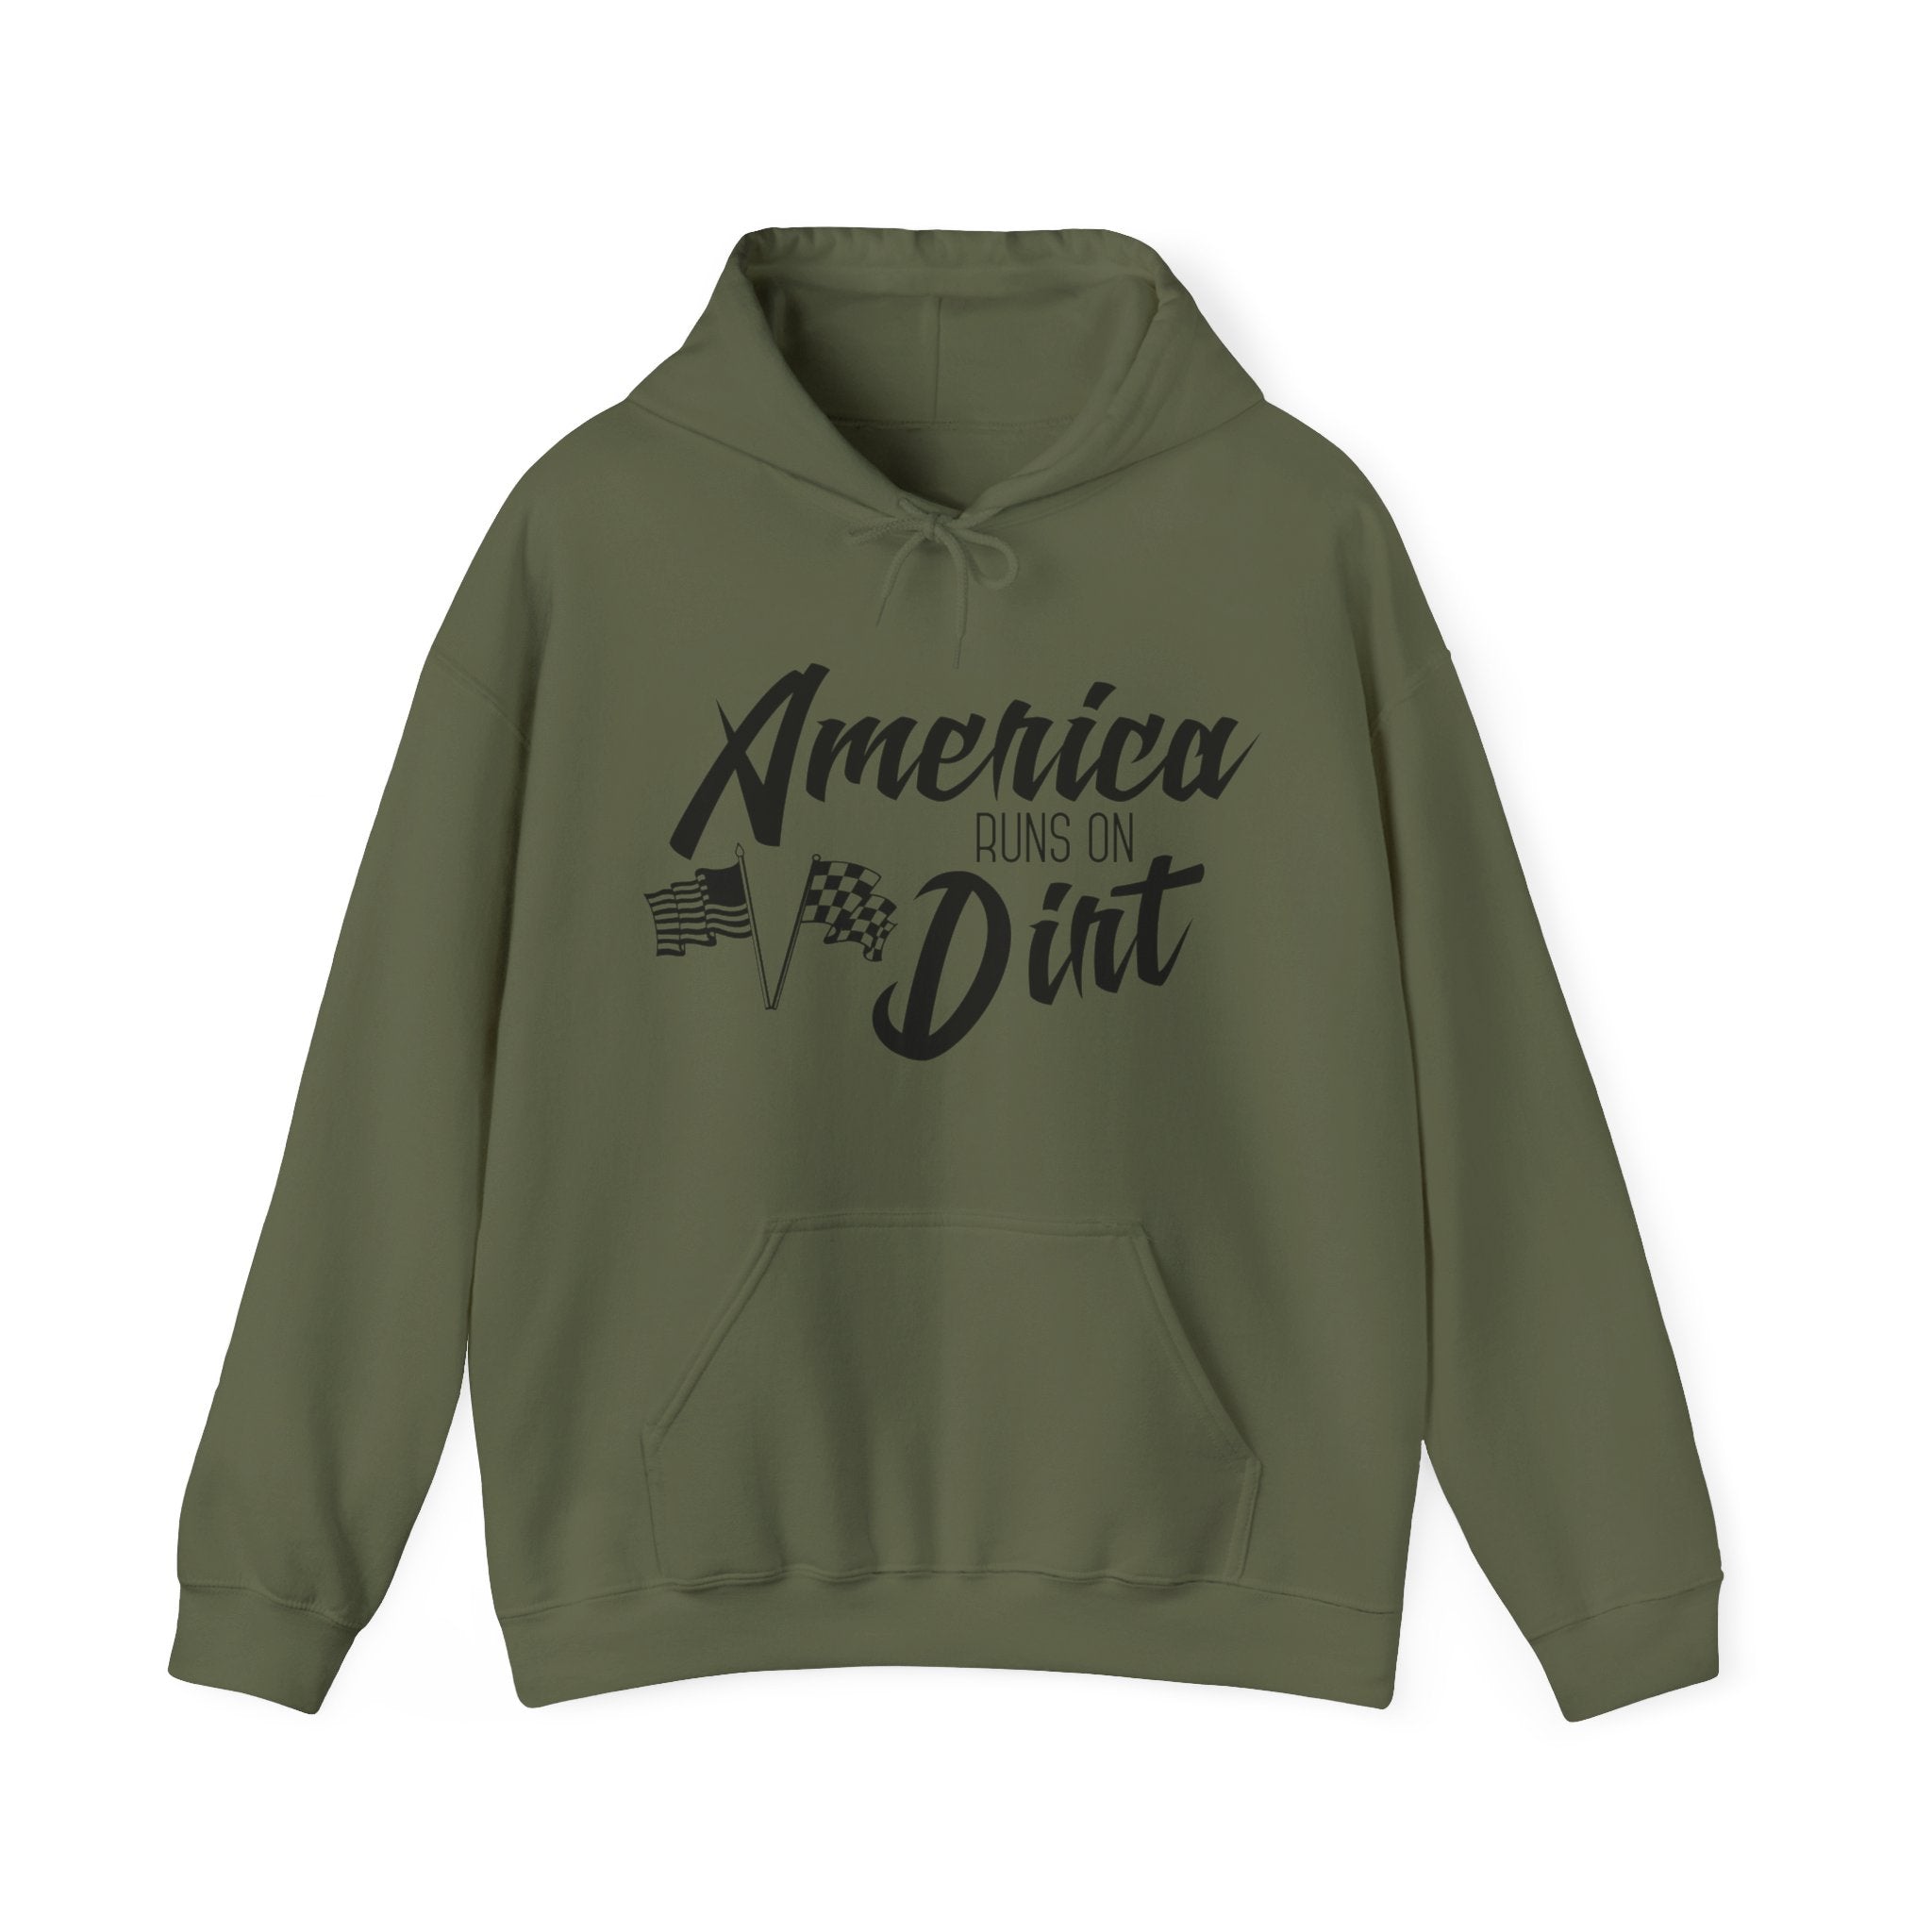 America Runs on Dirt Unisex Hooded Sweatshirt